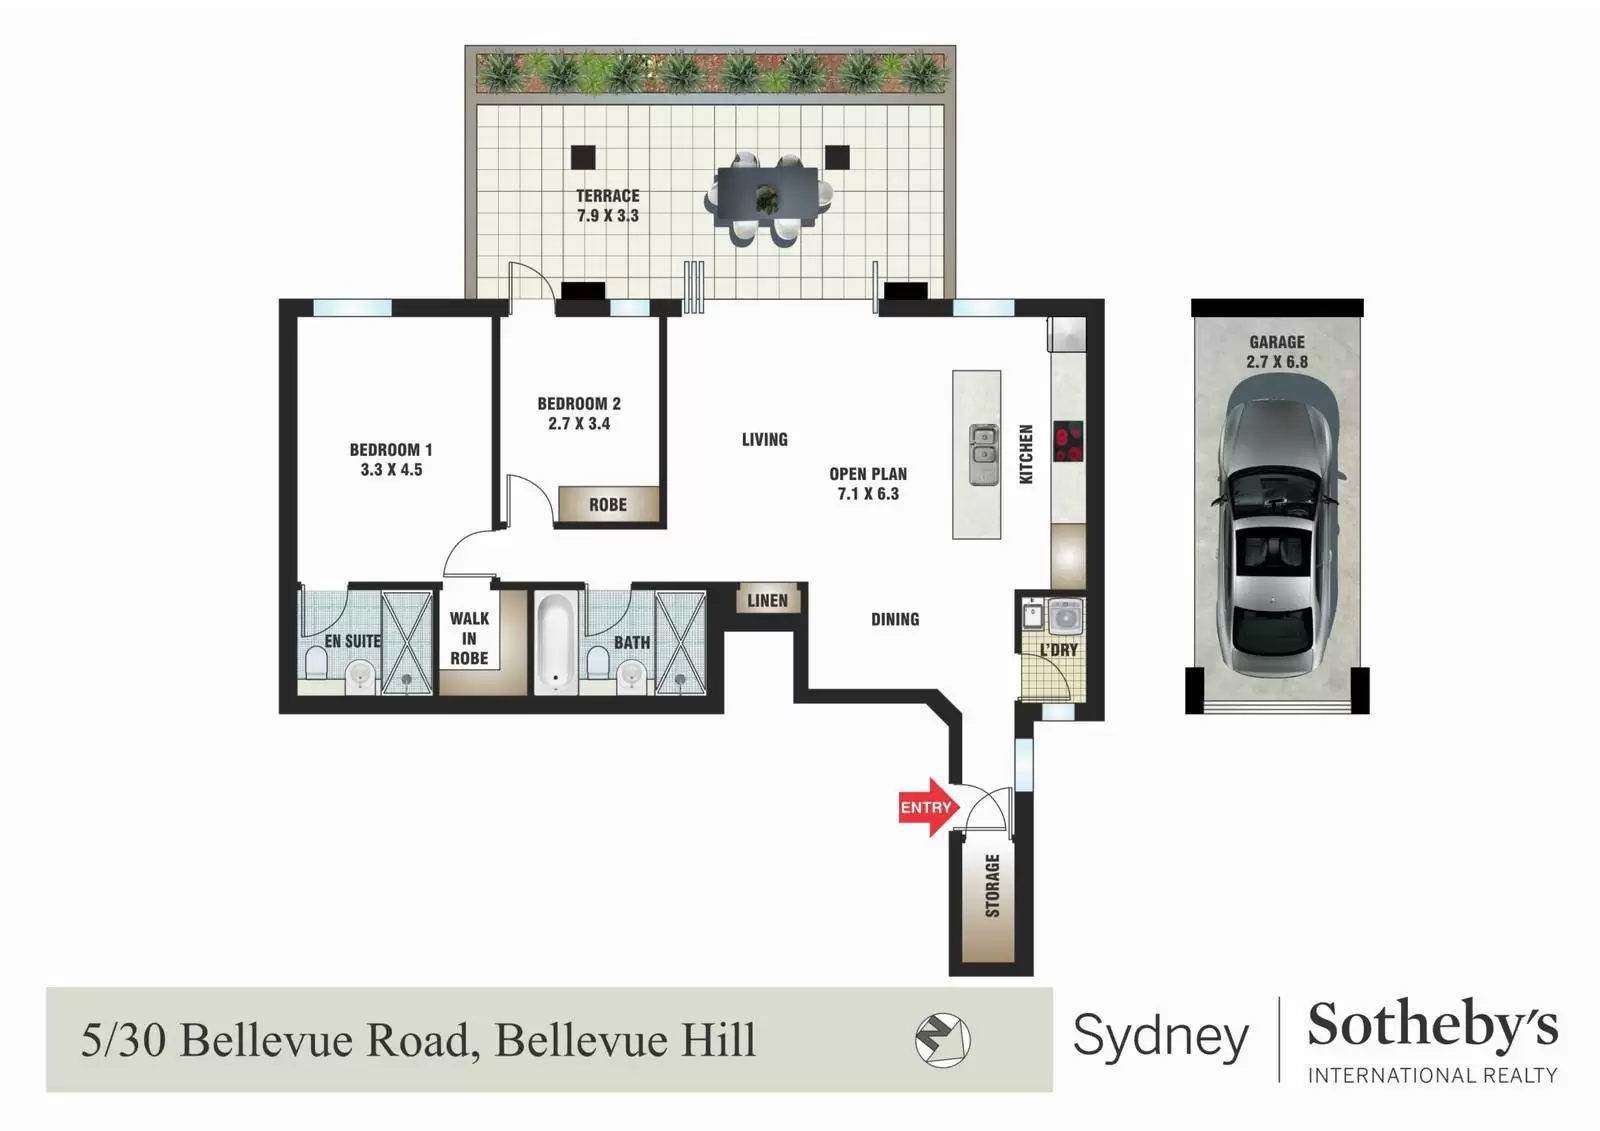 5/30 Bellevue Road, Bellevue Hill Sold by Sydney Sotheby's International Realty - image 1